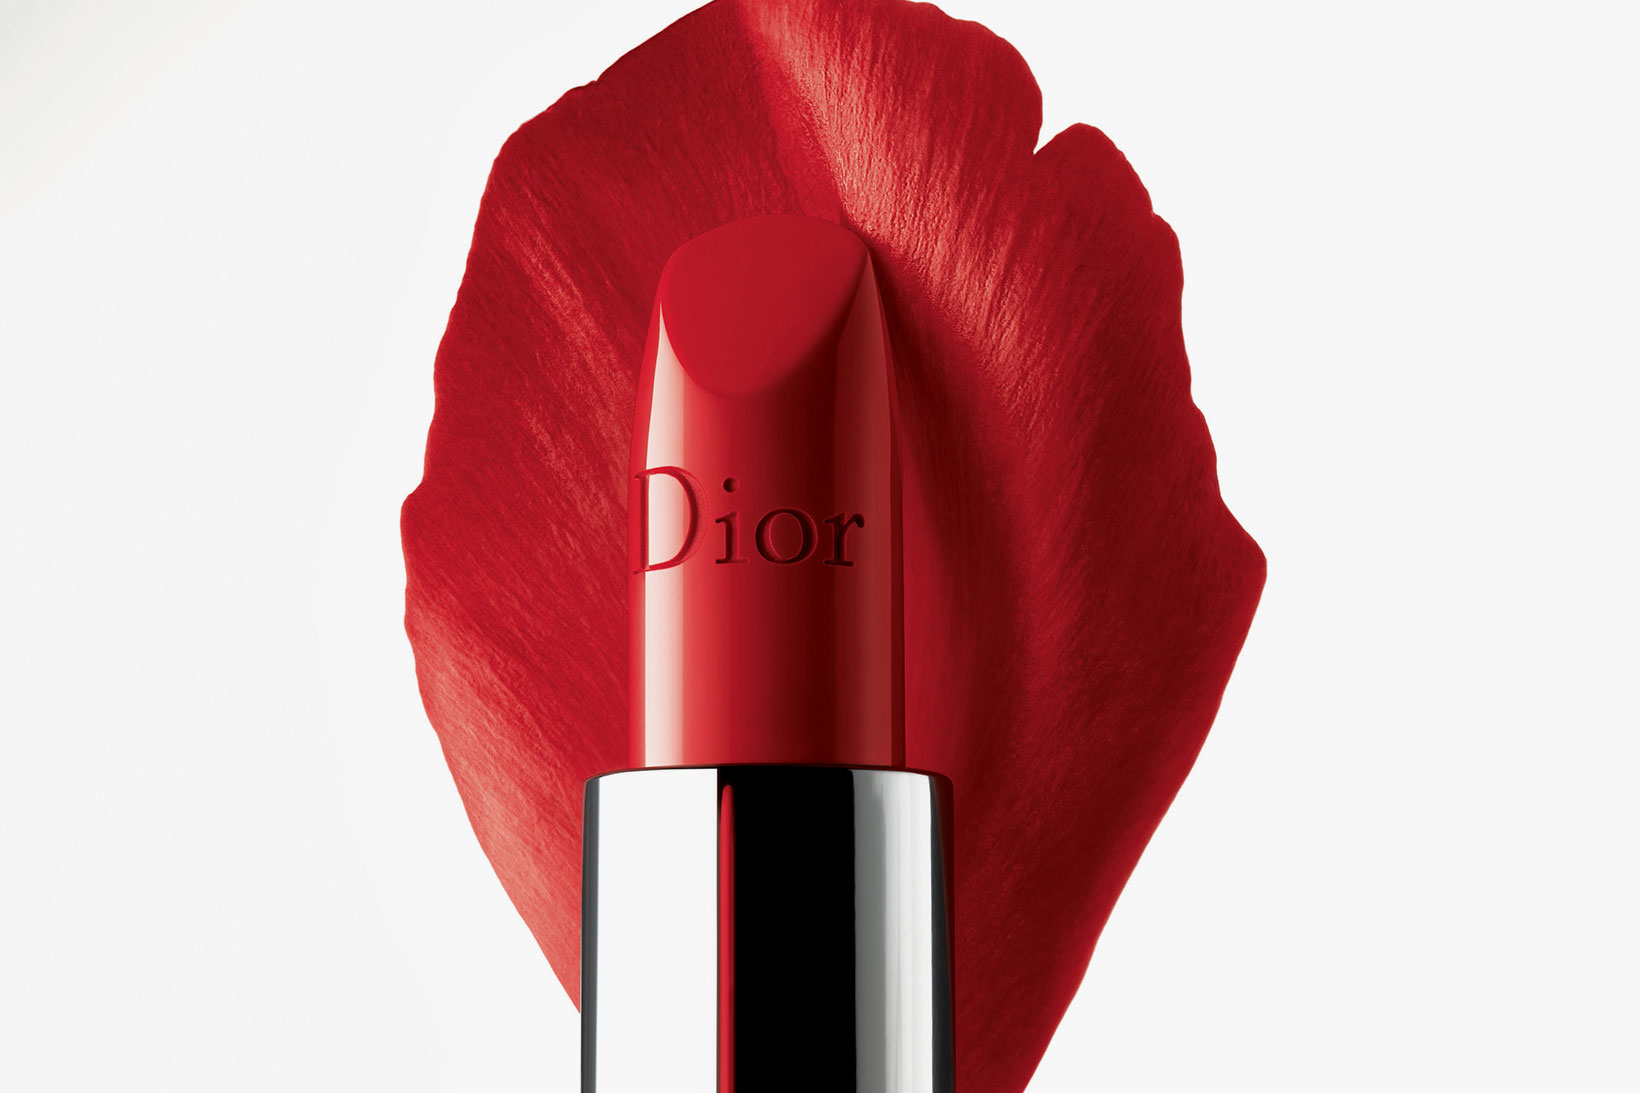 rouge dior satin balm lipsticks makeup skincare peter philips release date 5